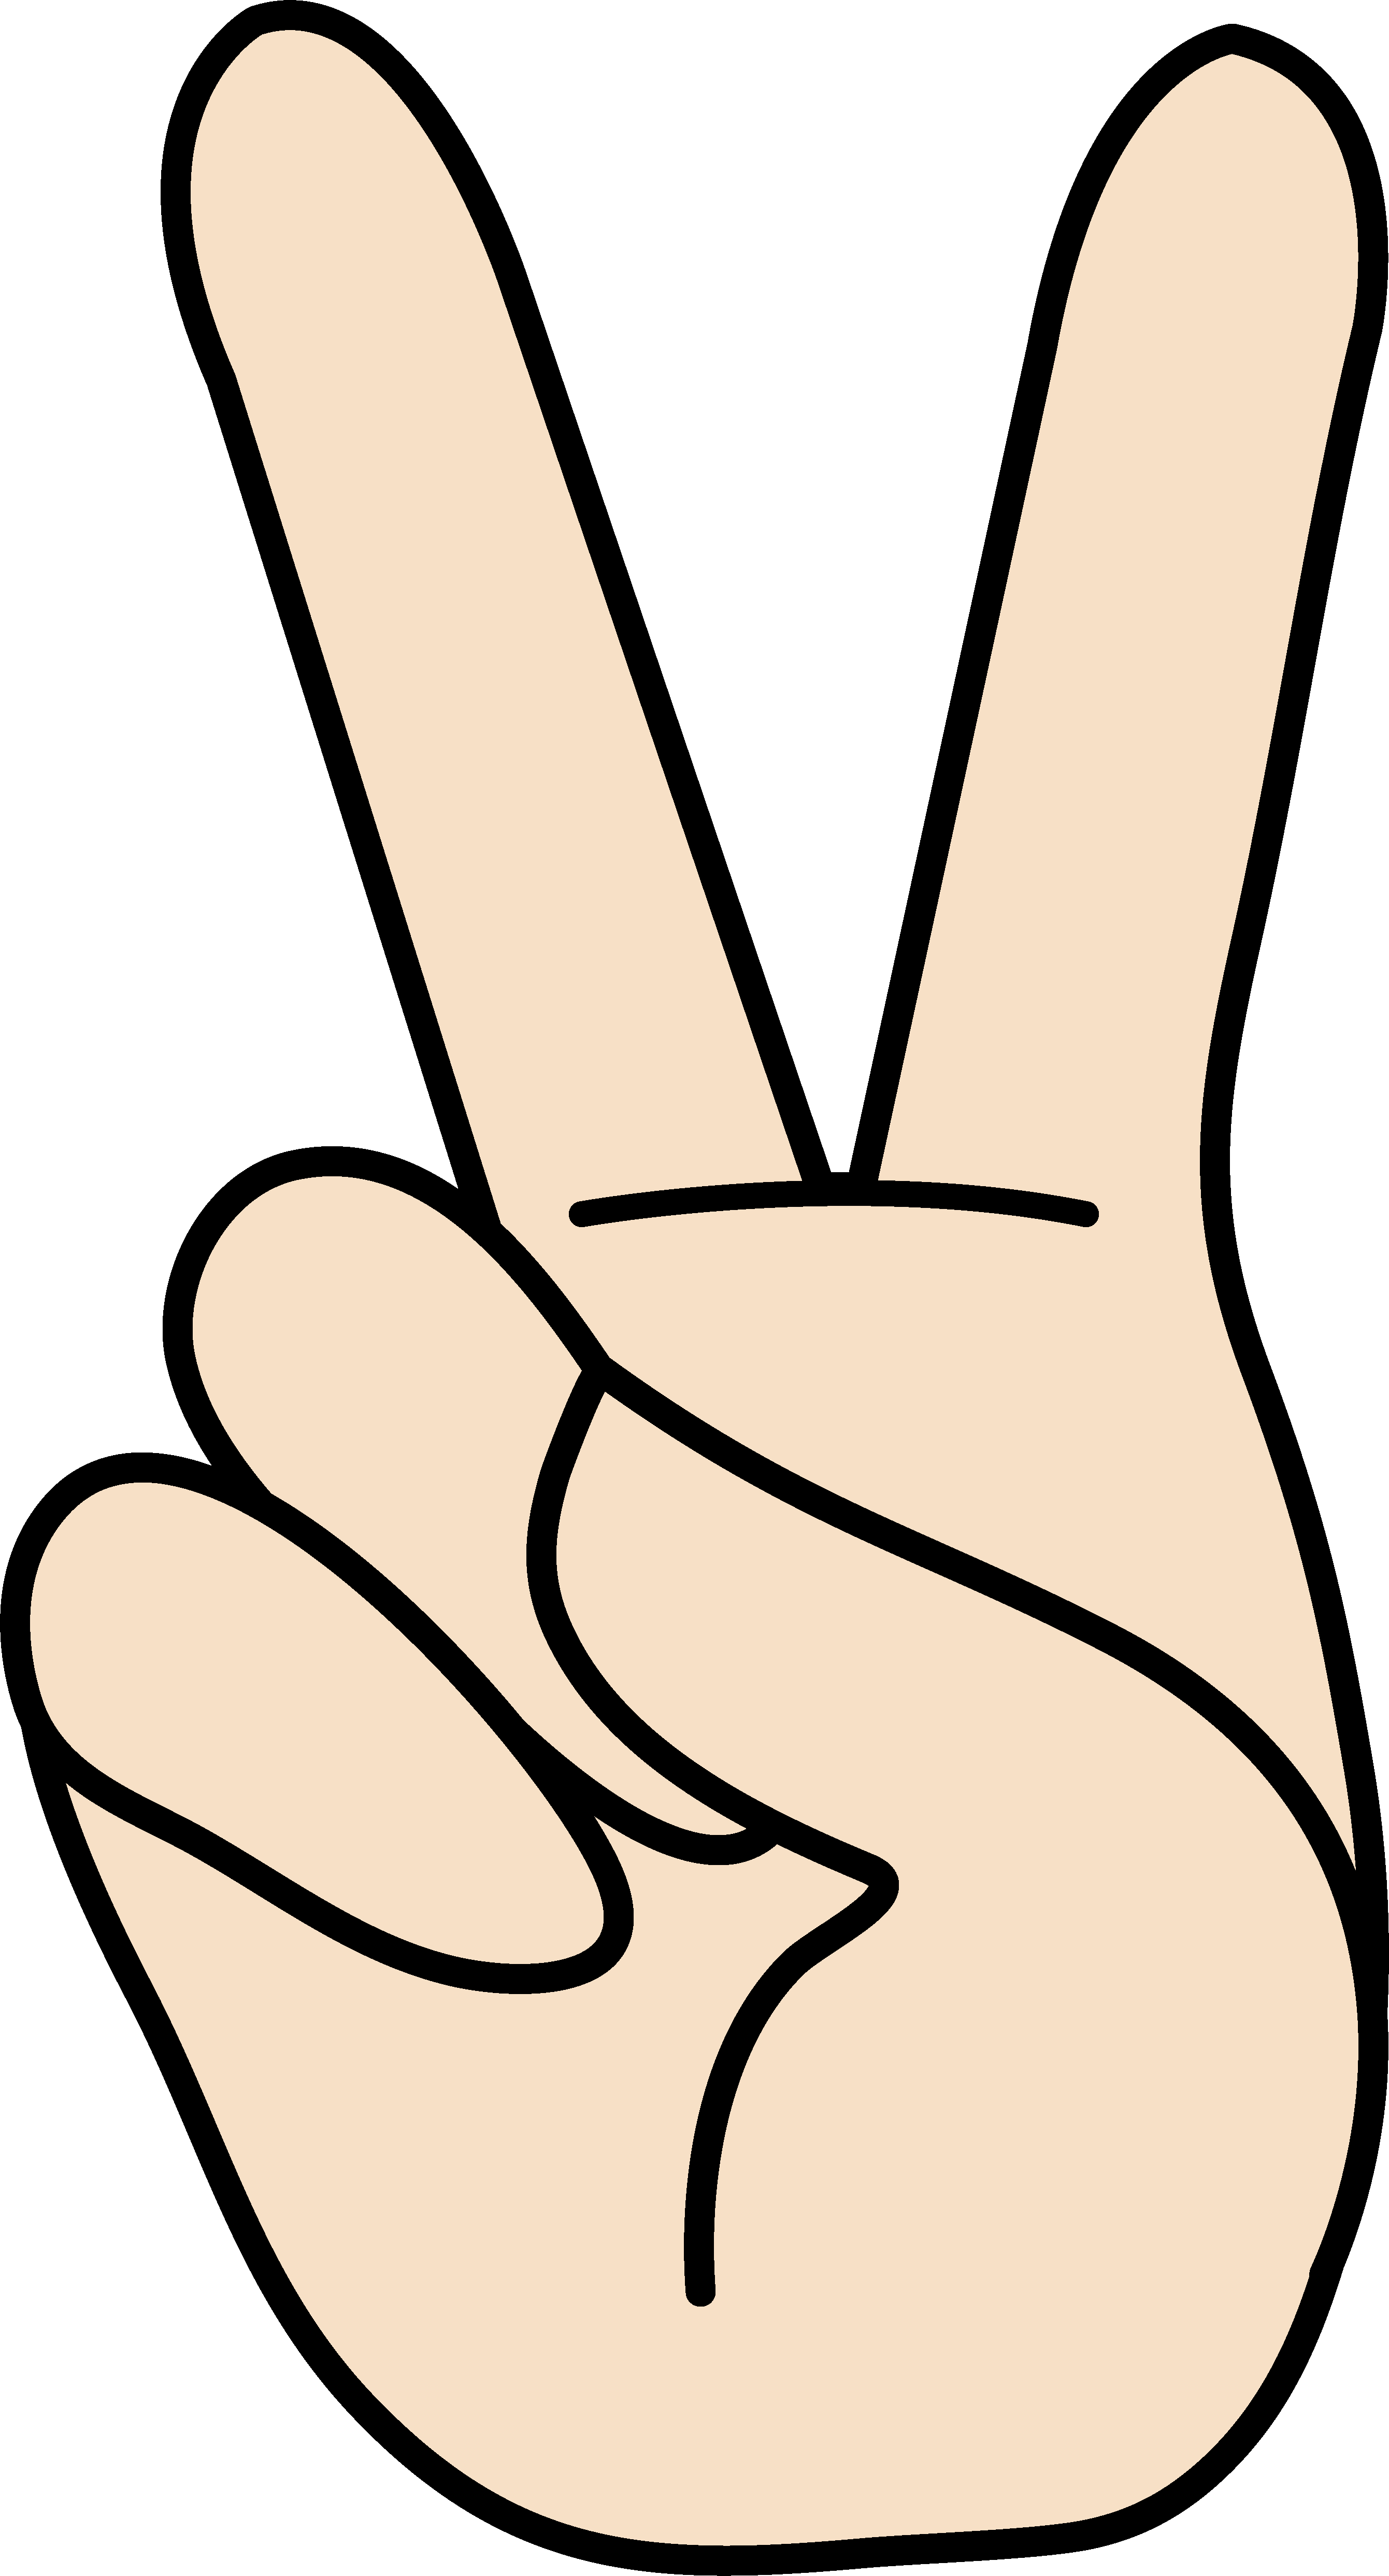 Cartoon Peace Sign Hand | Free Download Clip Art | Free Clip Art ...